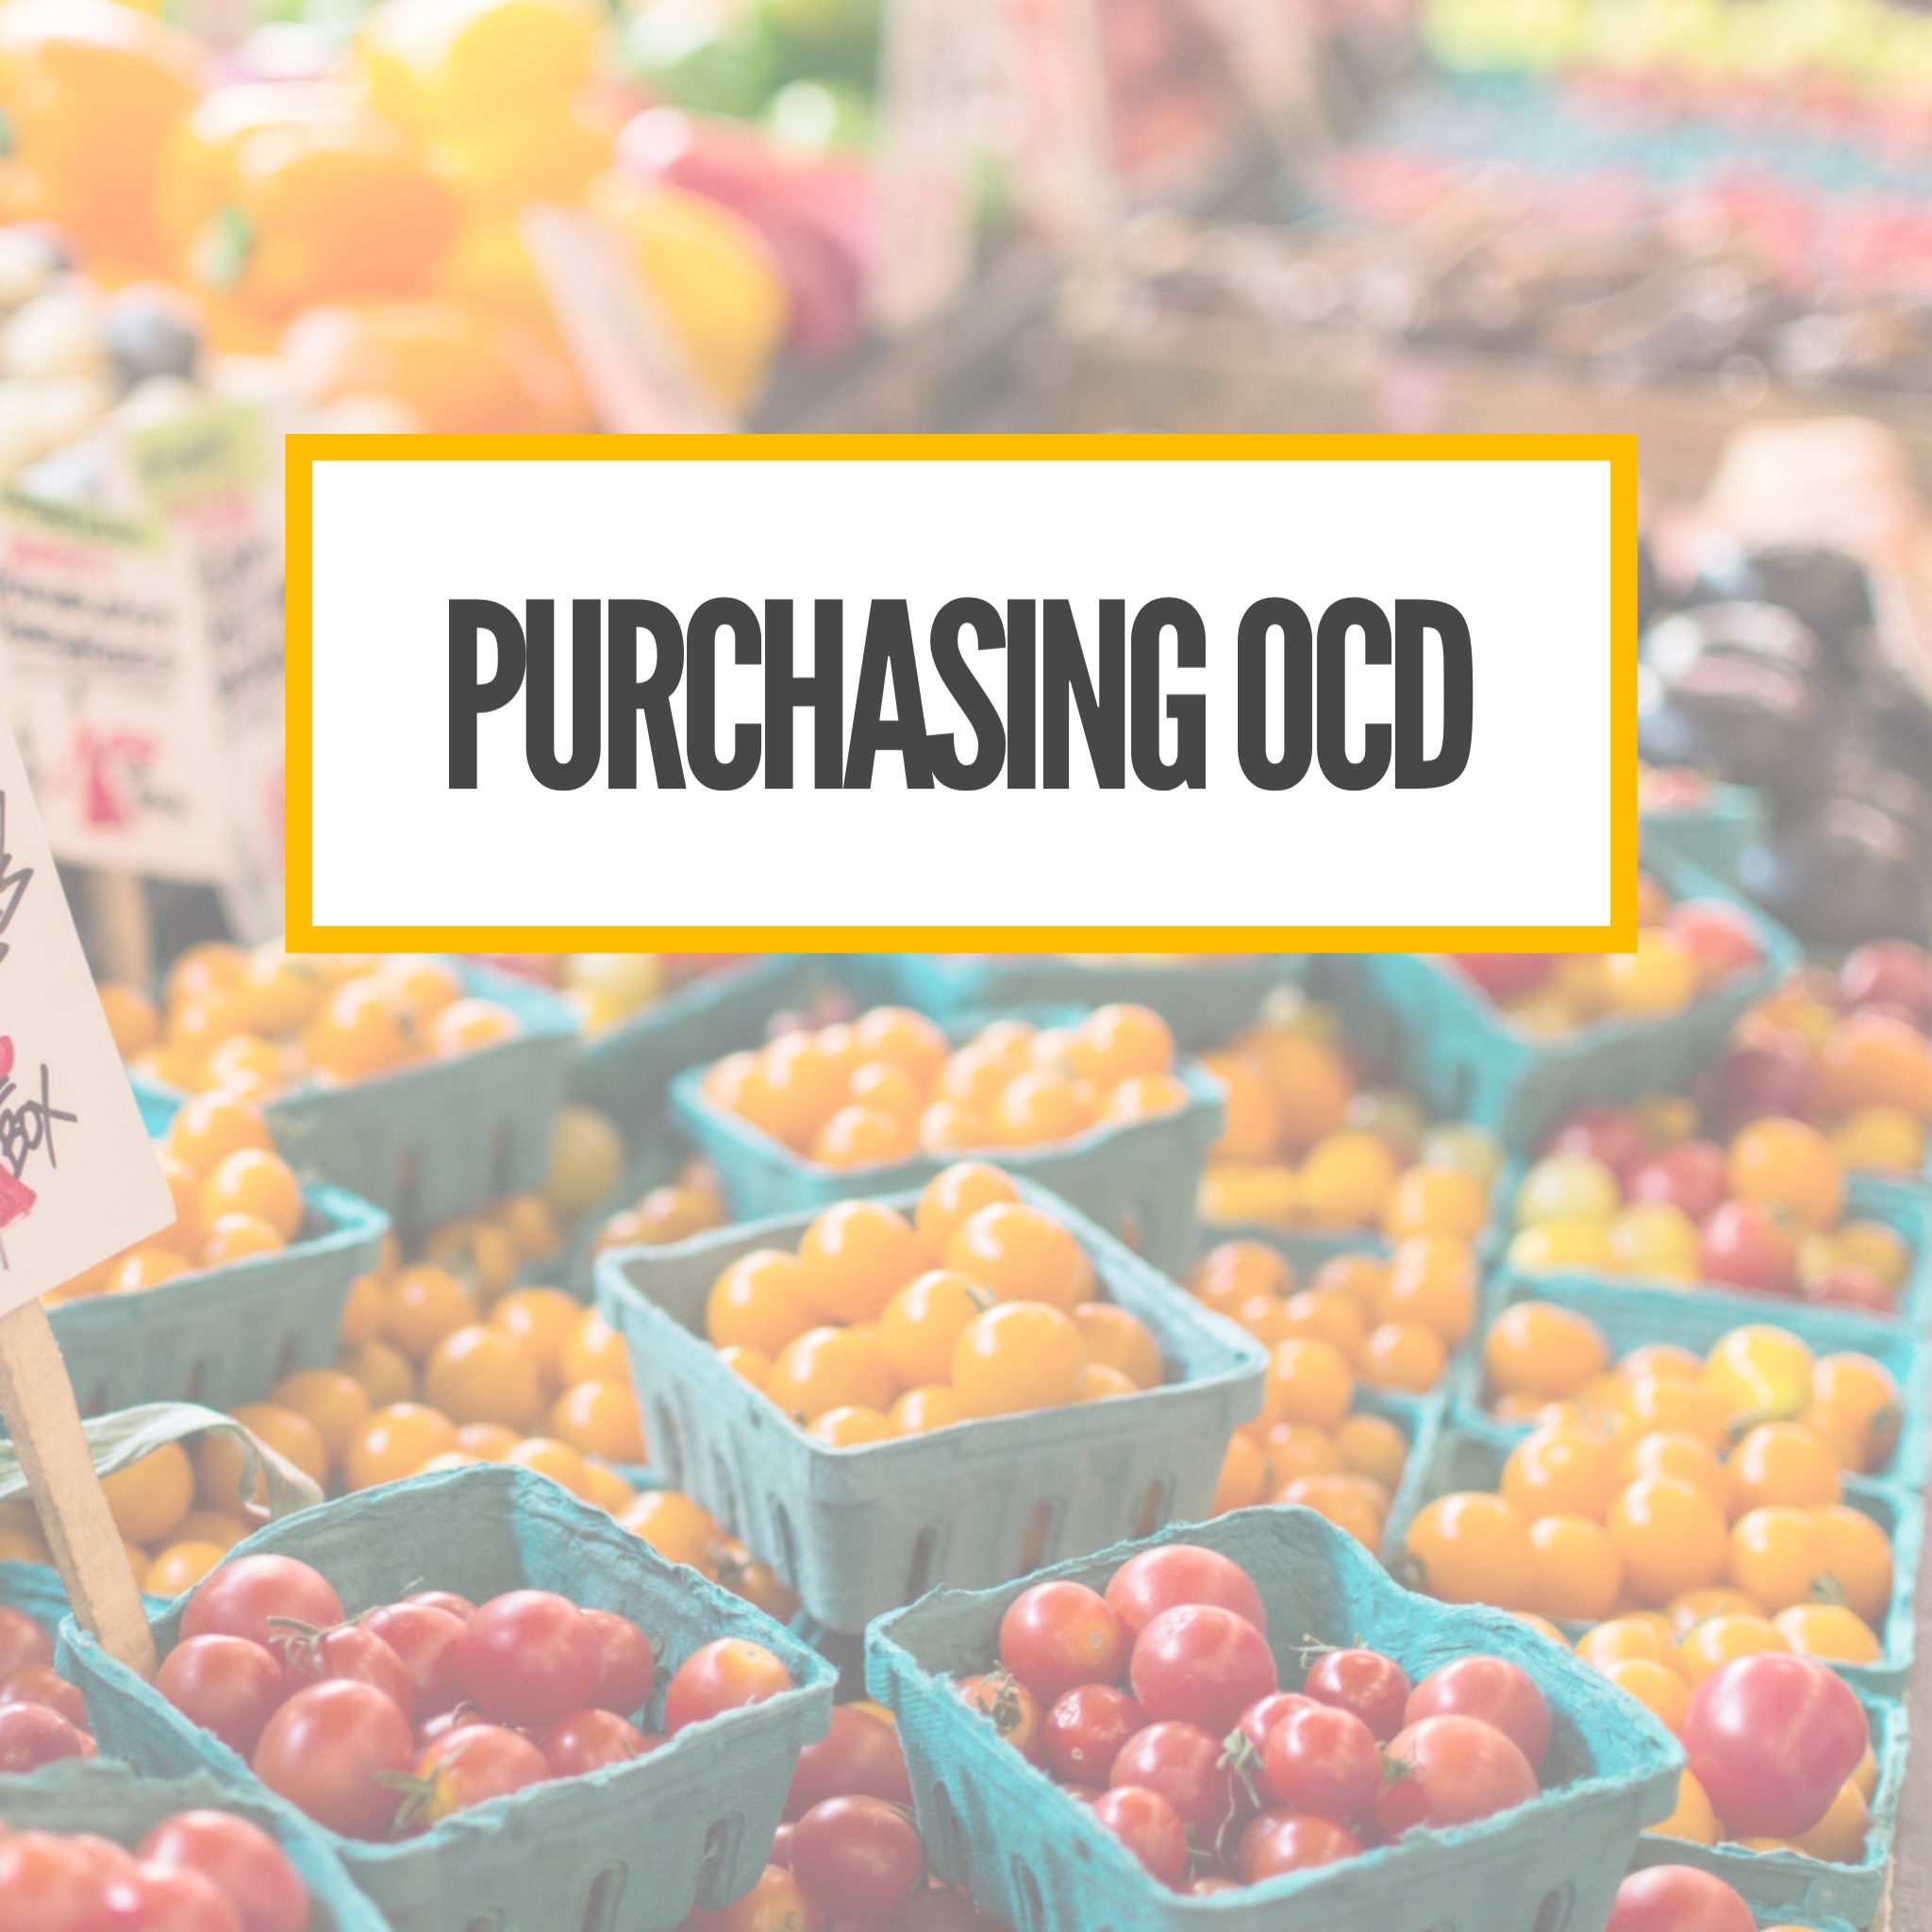 Purchasing OCD